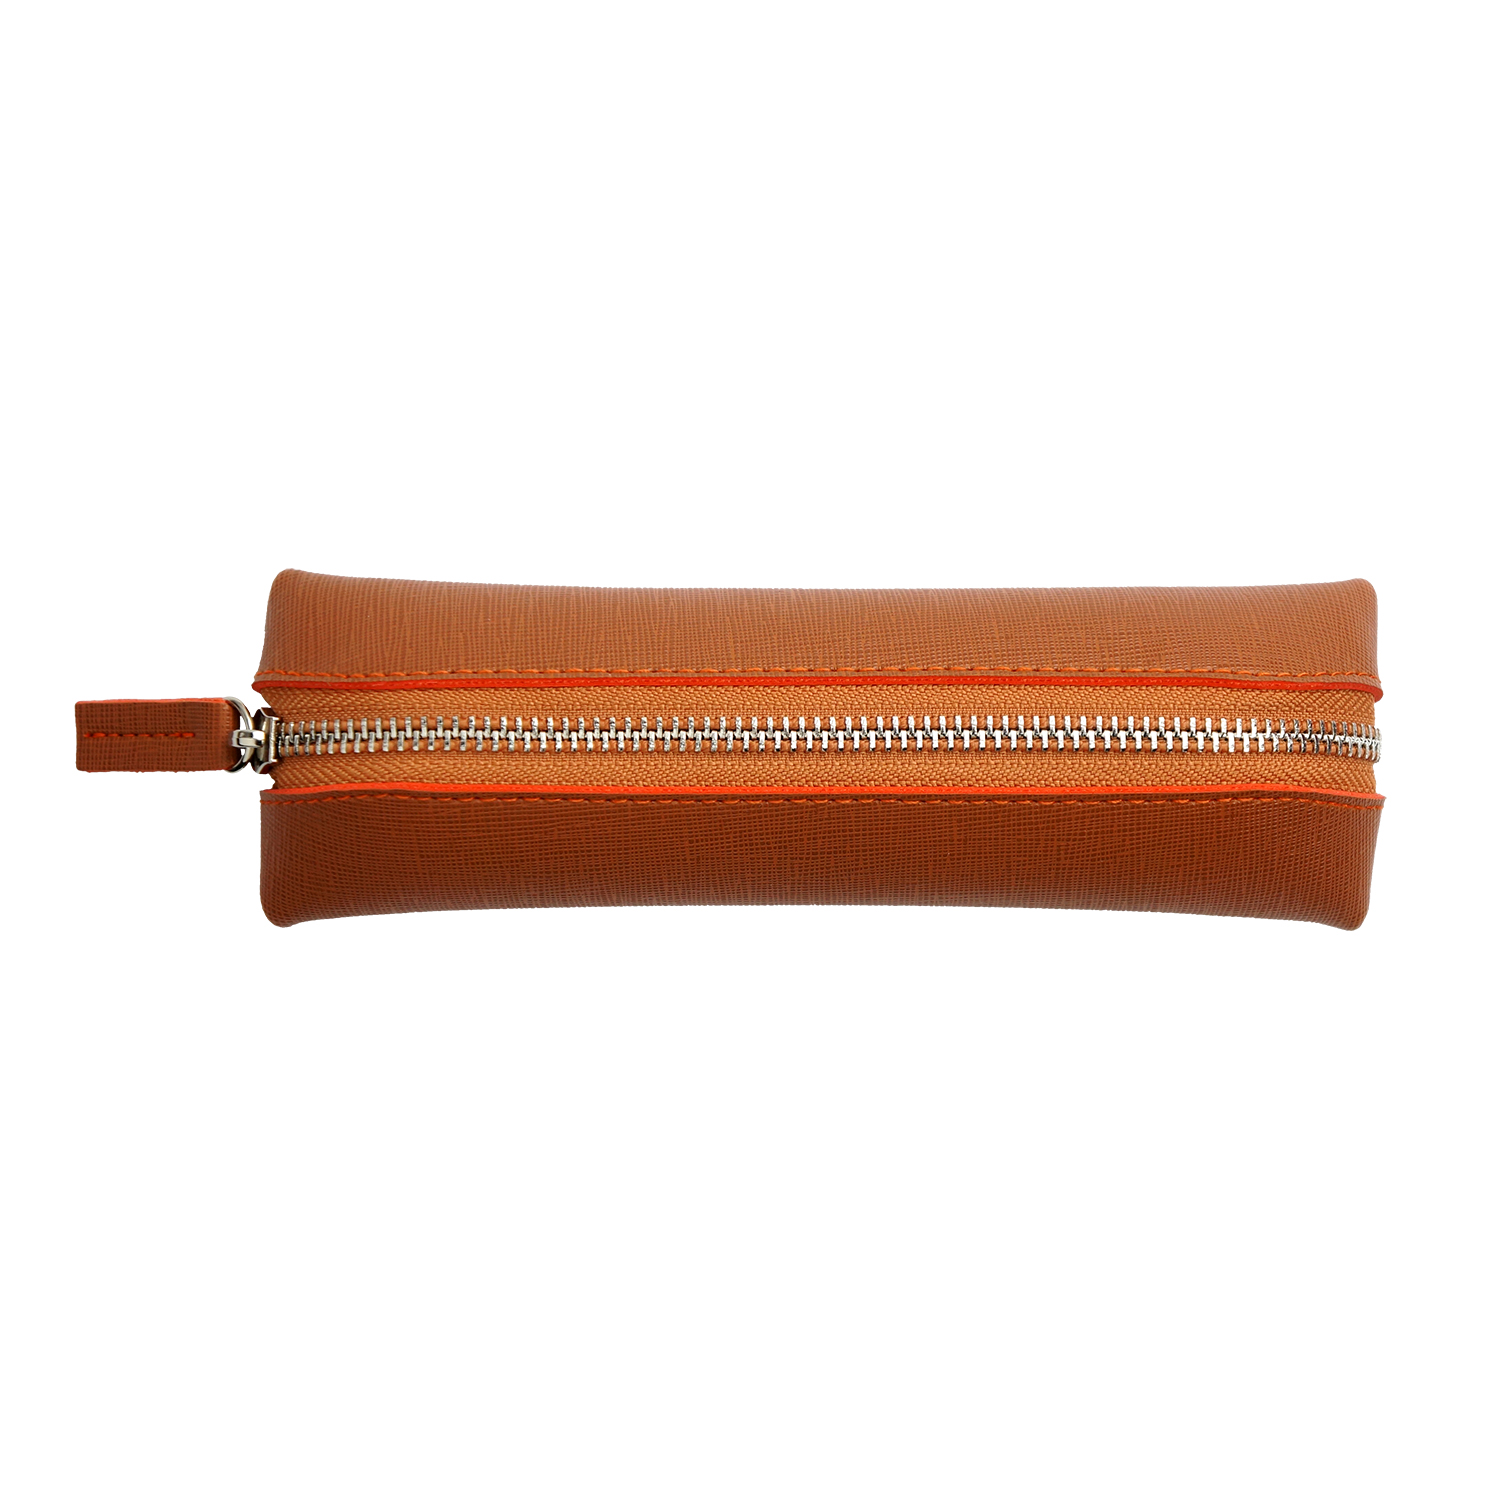 FD-1823 pencil case Orange